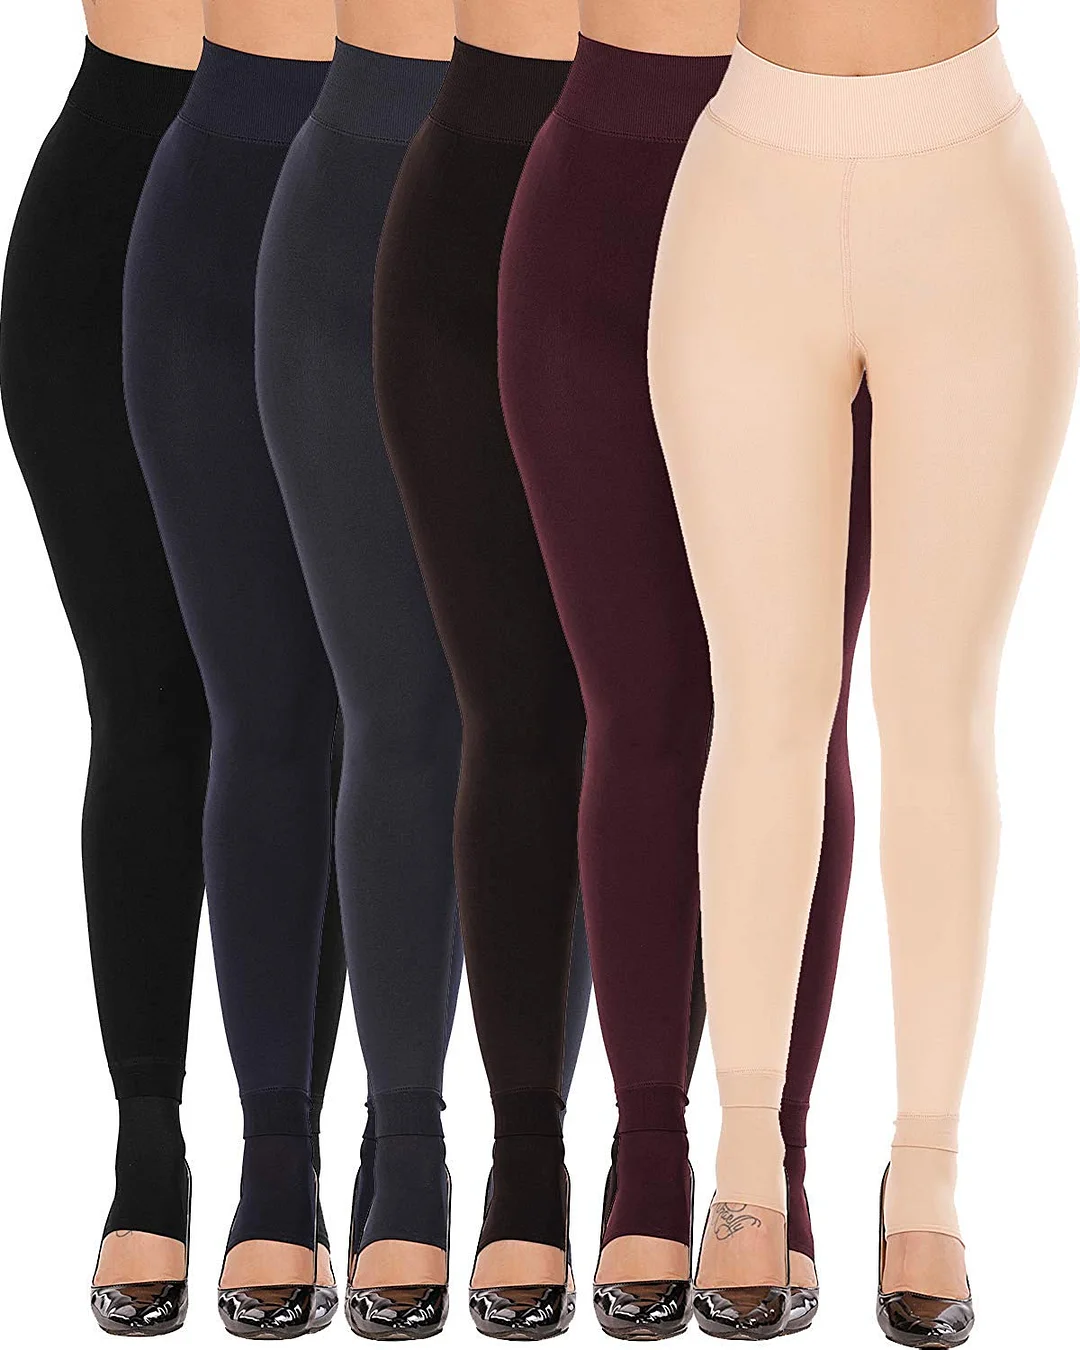 Winter Warm Fleece Lined Leggings for women - Thick Velvet Tights Thermal Pants